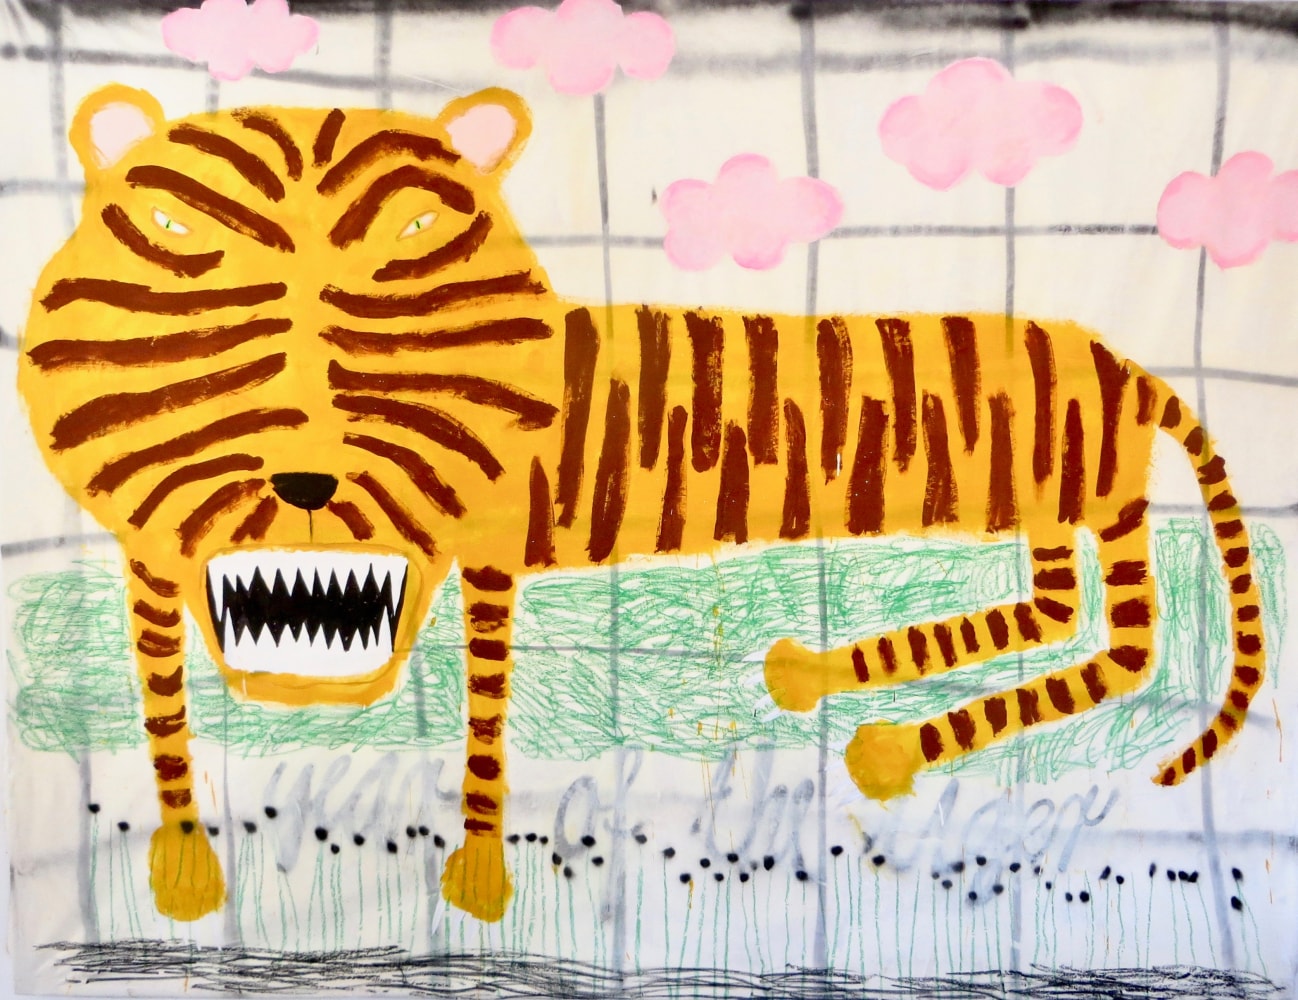 Gabrielle Graessle
year of the tiger, 2022
Acrylic Spray and Oil Pastel on Canvas
80h x 102w x 1.50d in
203.20h x 259.08w x 3.81d cm